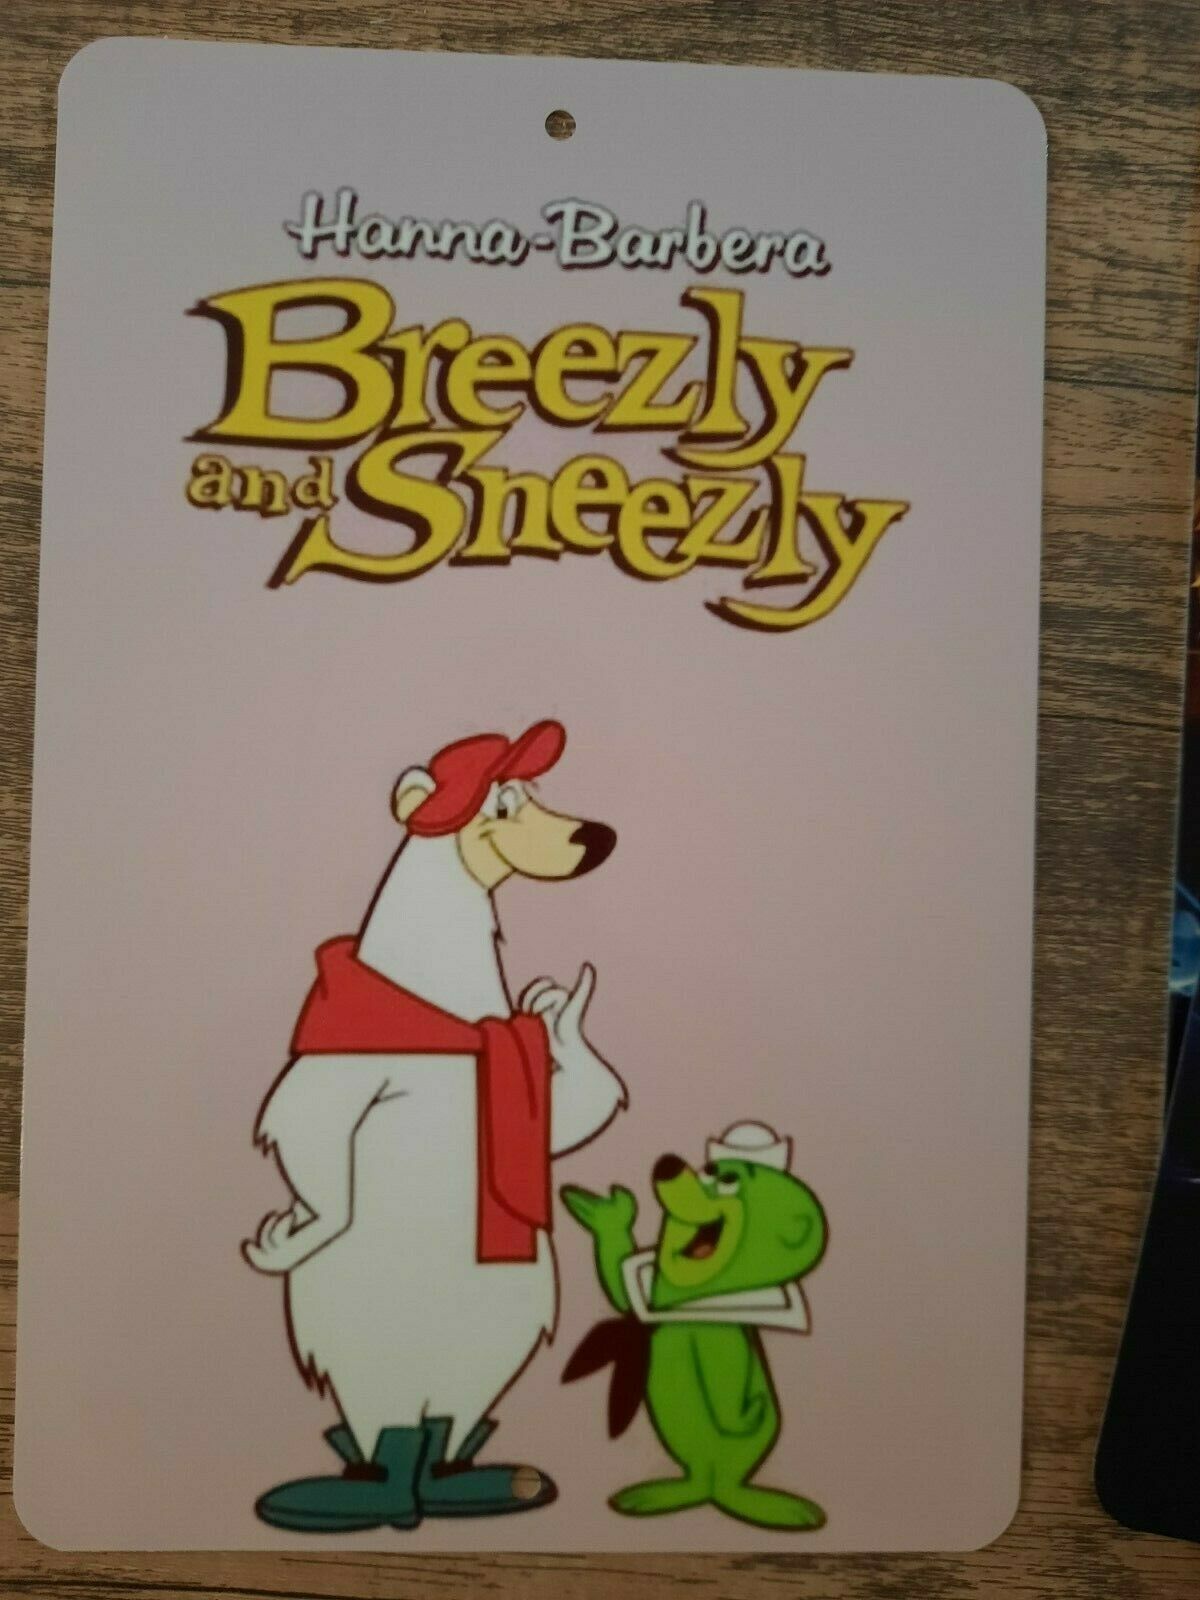 Breezley and Sneezly Hanna Barbera Classic Cartoon 8x12 Metal Wall Sign